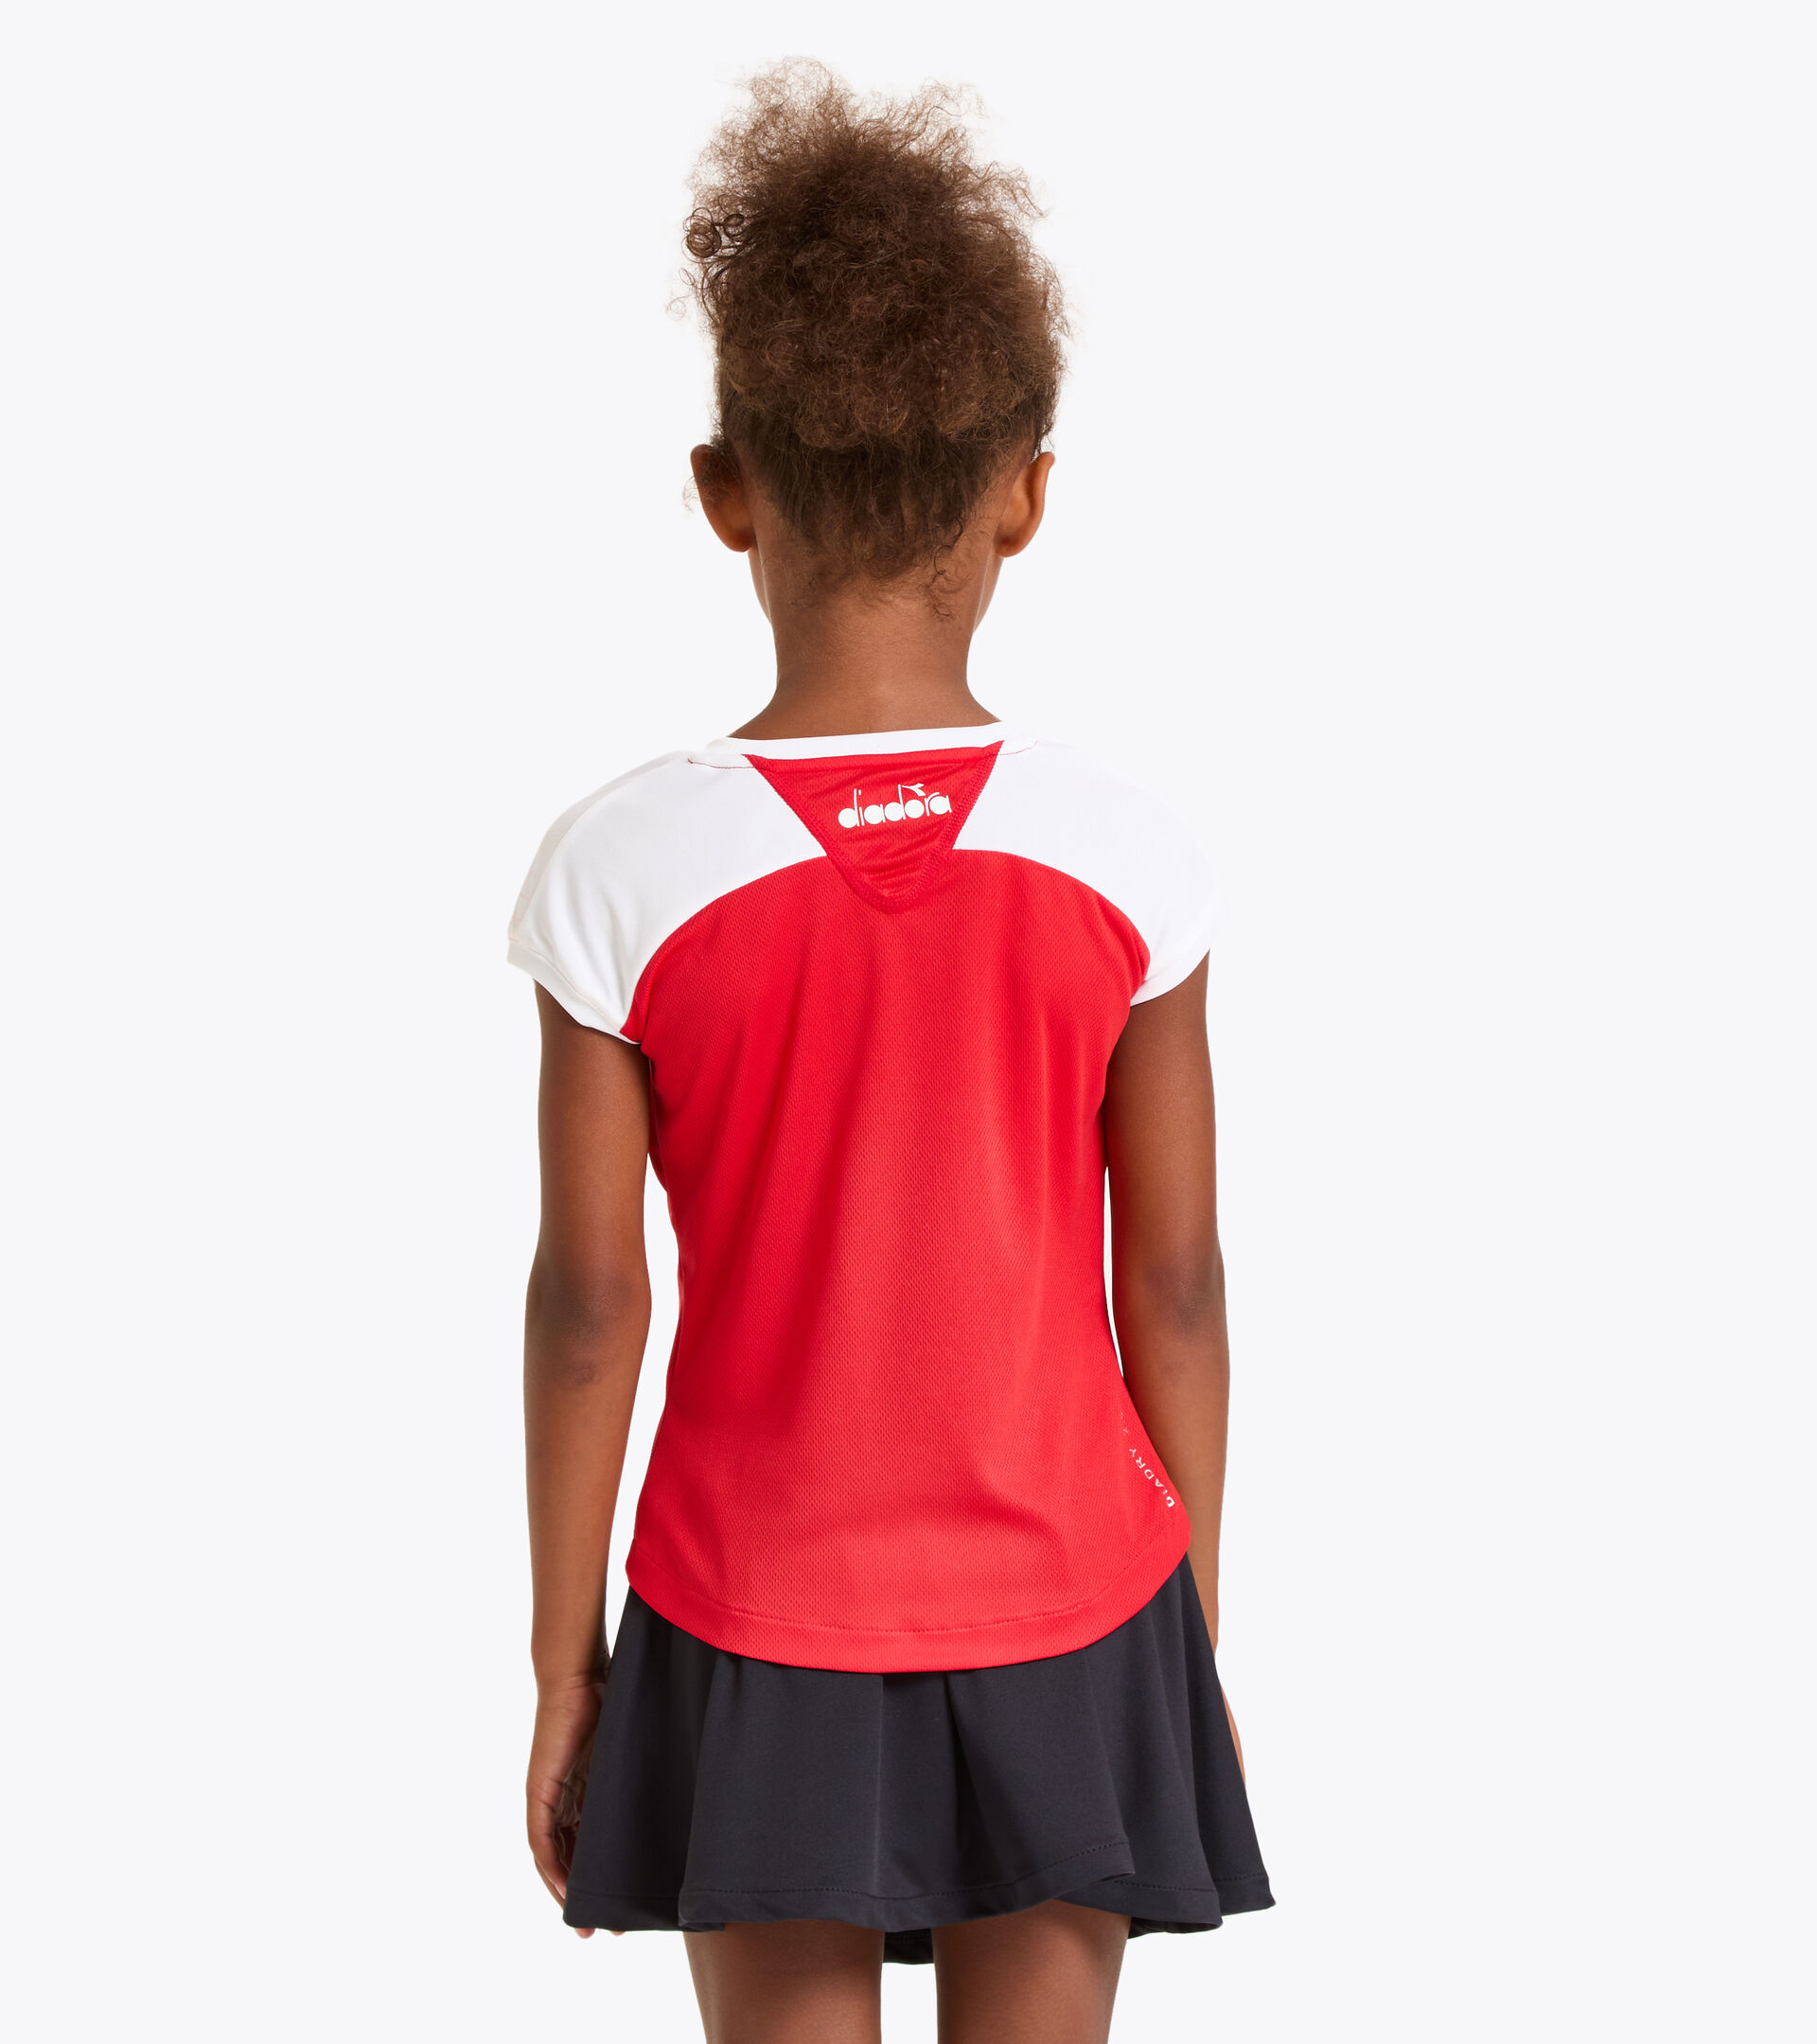 Tennis T-shirt - Junior G. T-SHIRT COURT TOMATO RED - Diadora